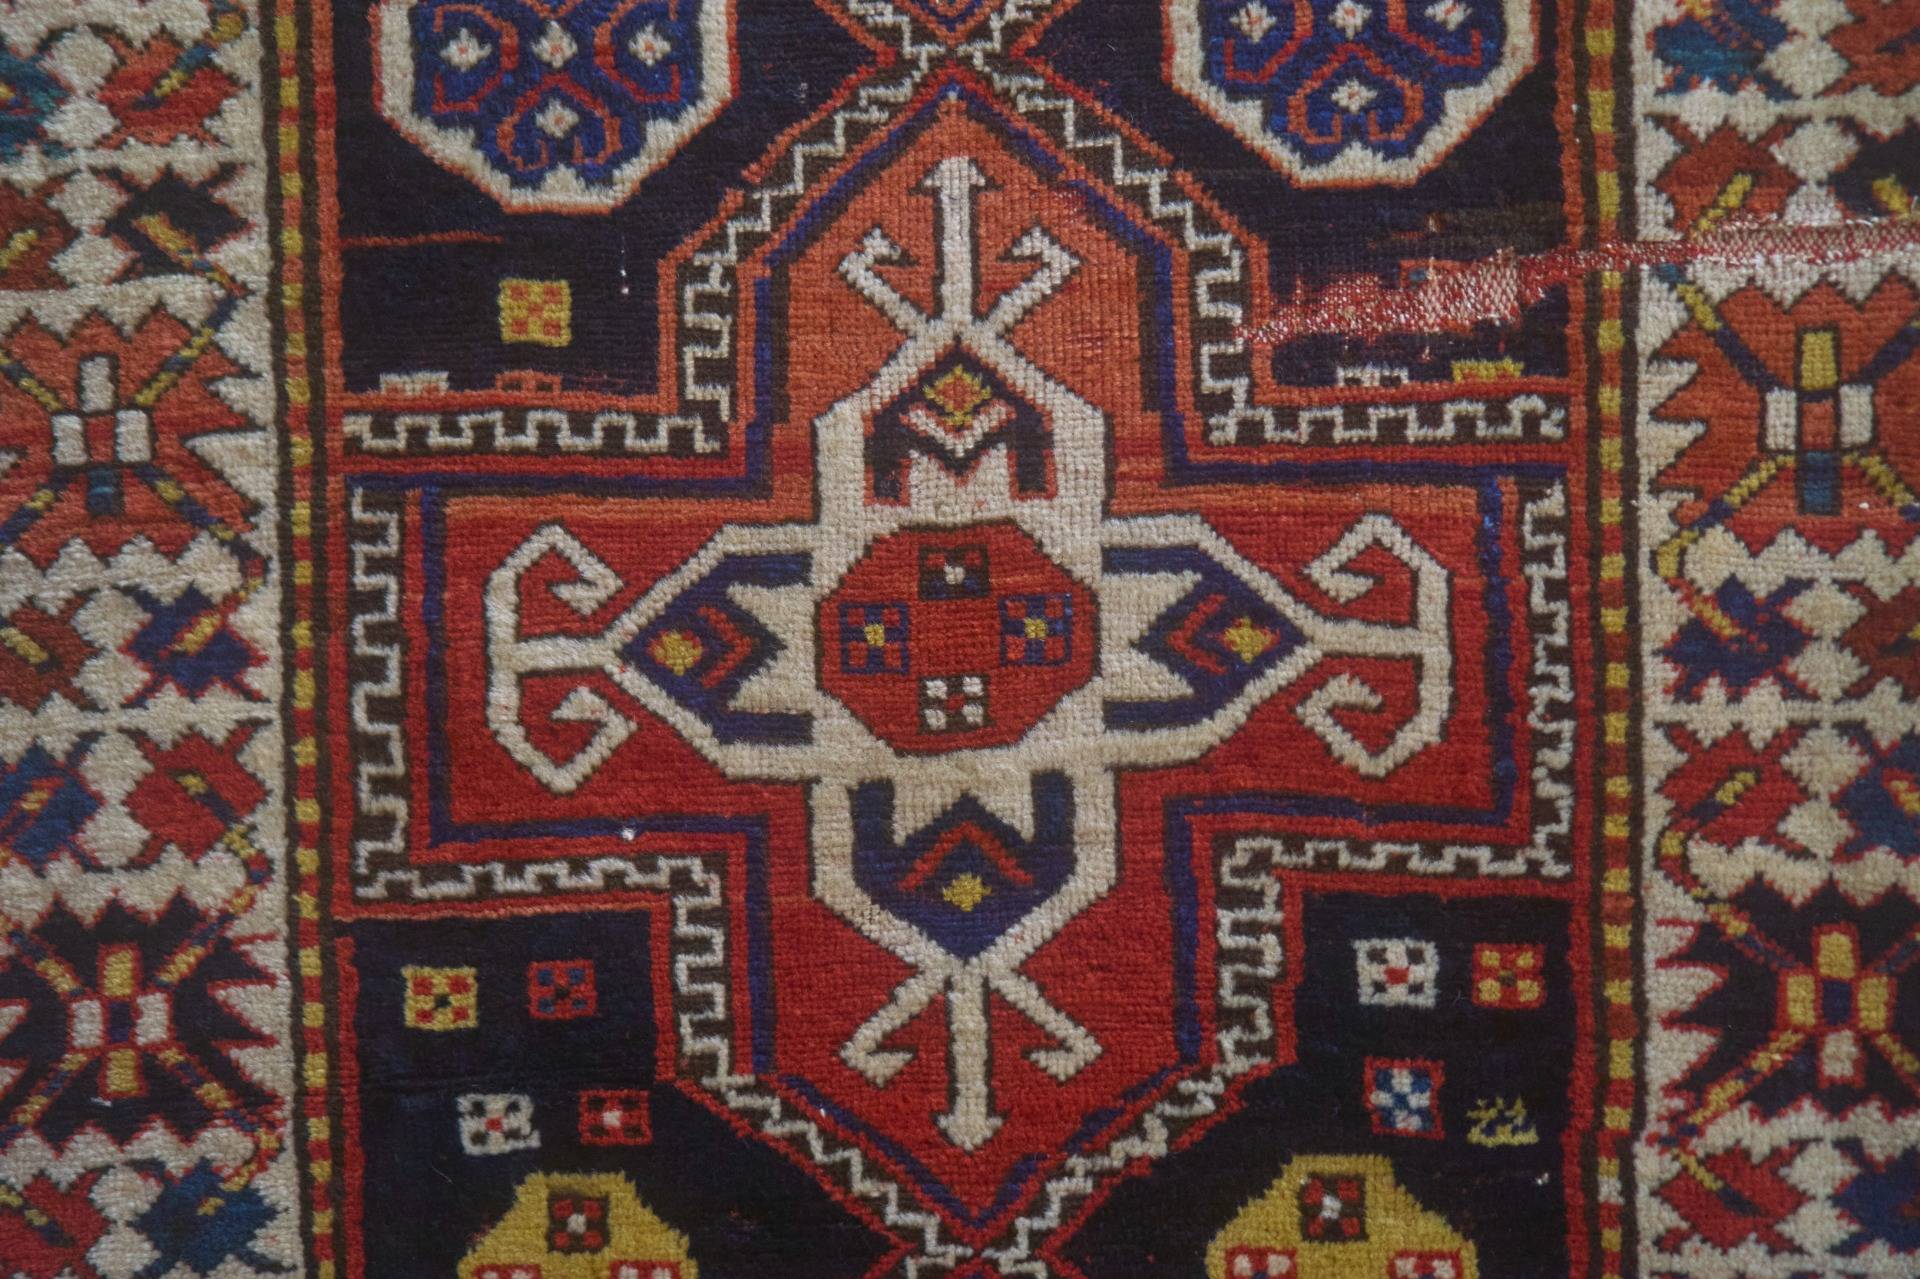 The Beauty of The Armenian Carpet